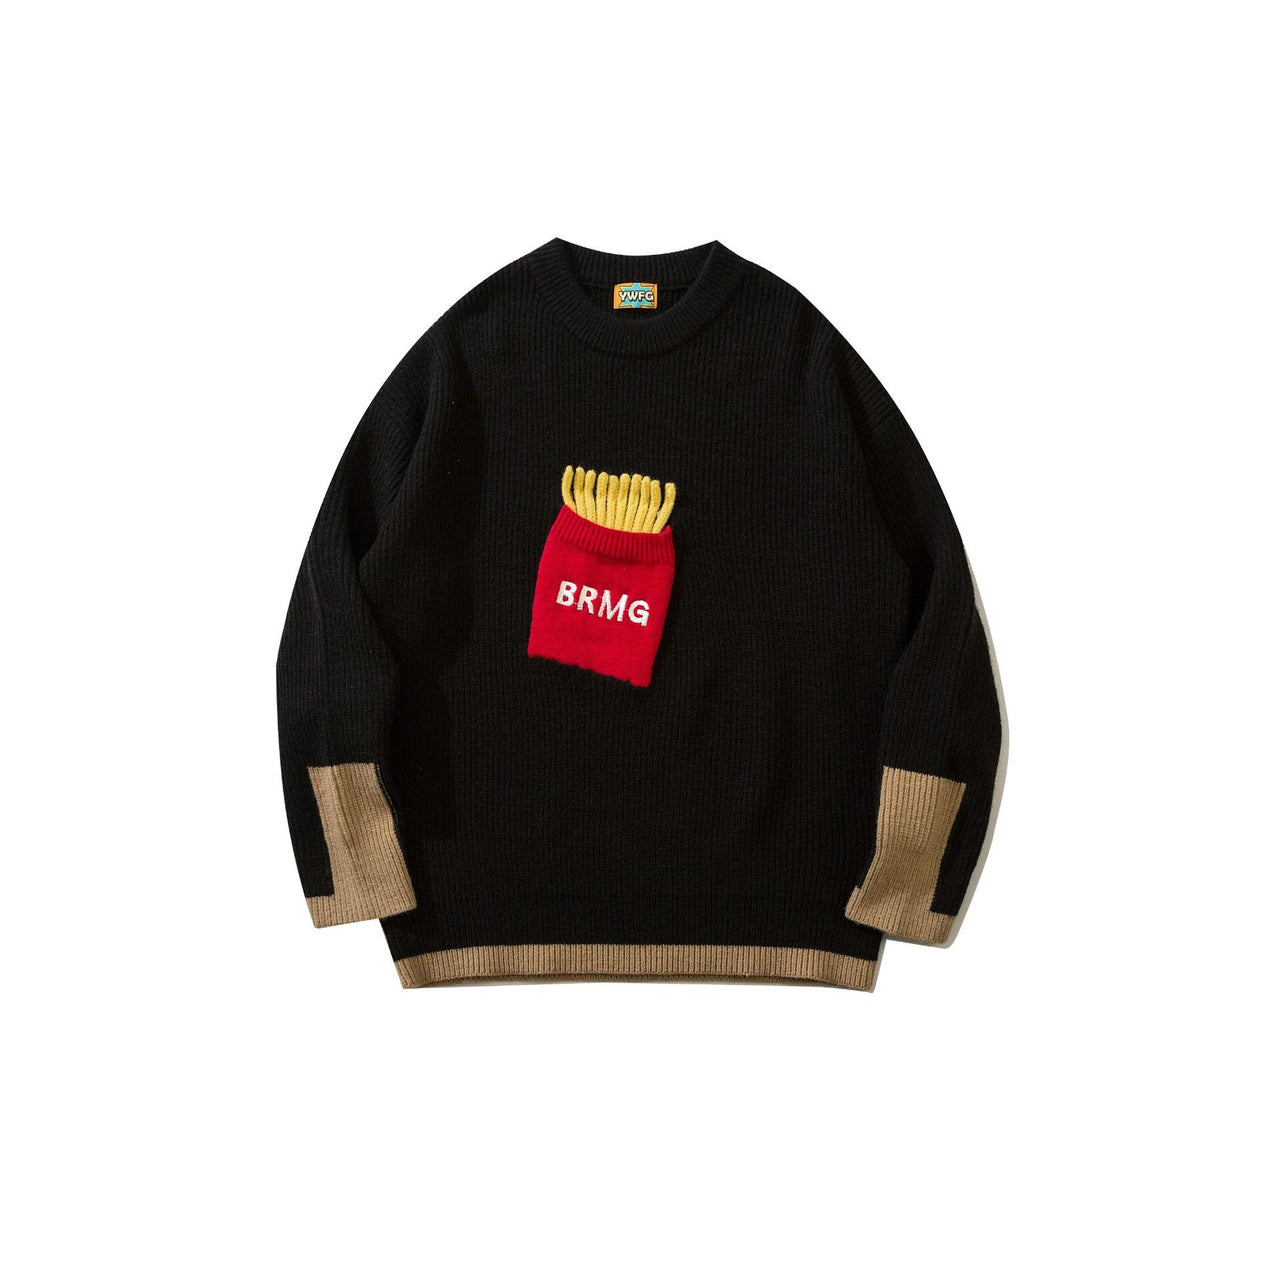 Potatoe Fries Knitted Sweater - Black / S